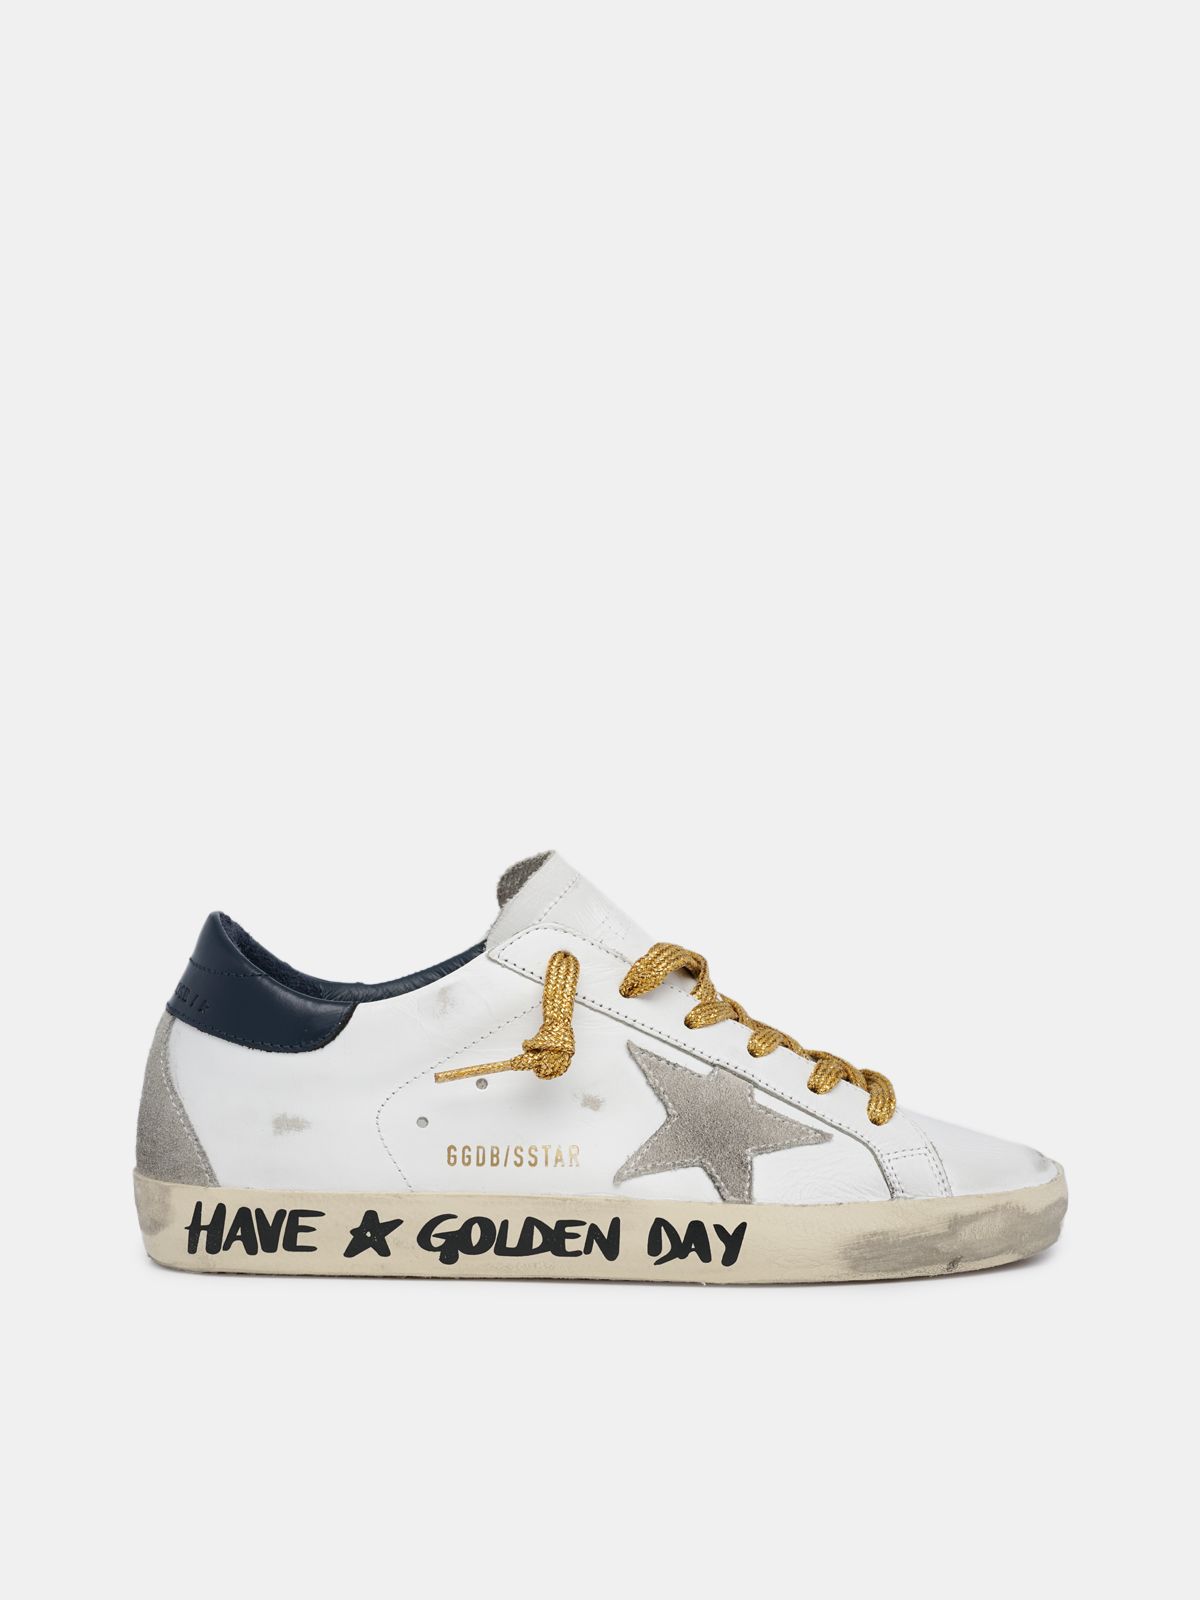 golden goose sneakers sale size 41